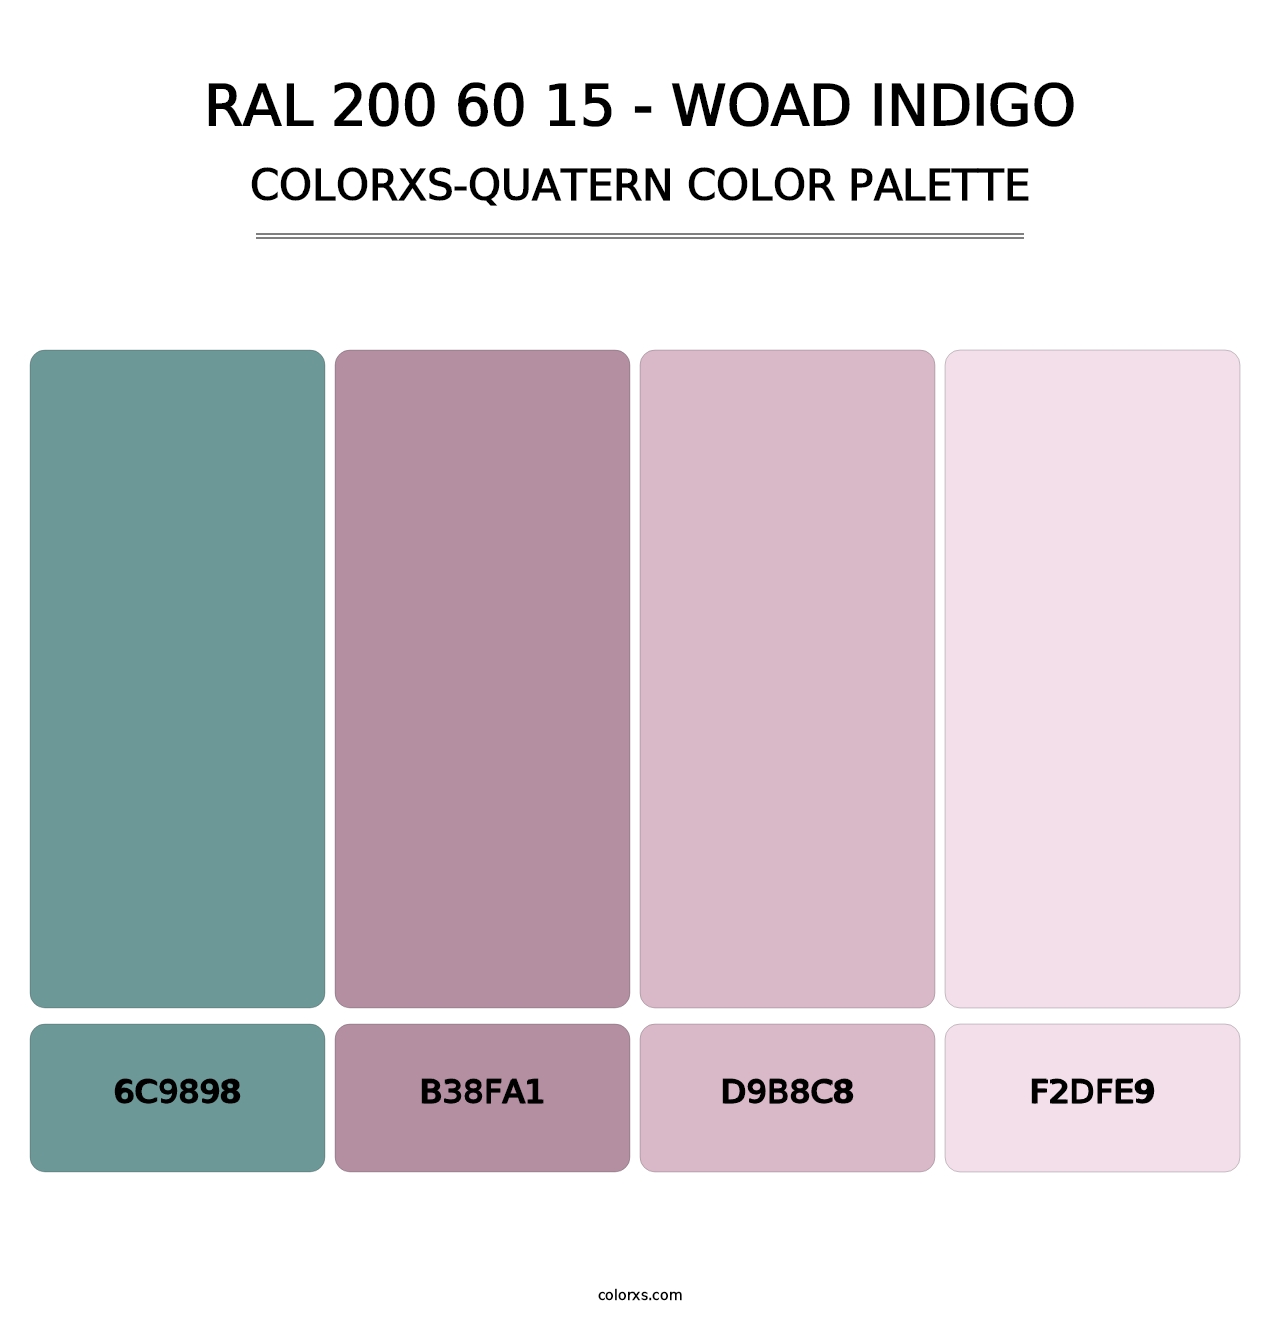 RAL 200 60 15 - Woad Indigo - Colorxs Quatern Palette